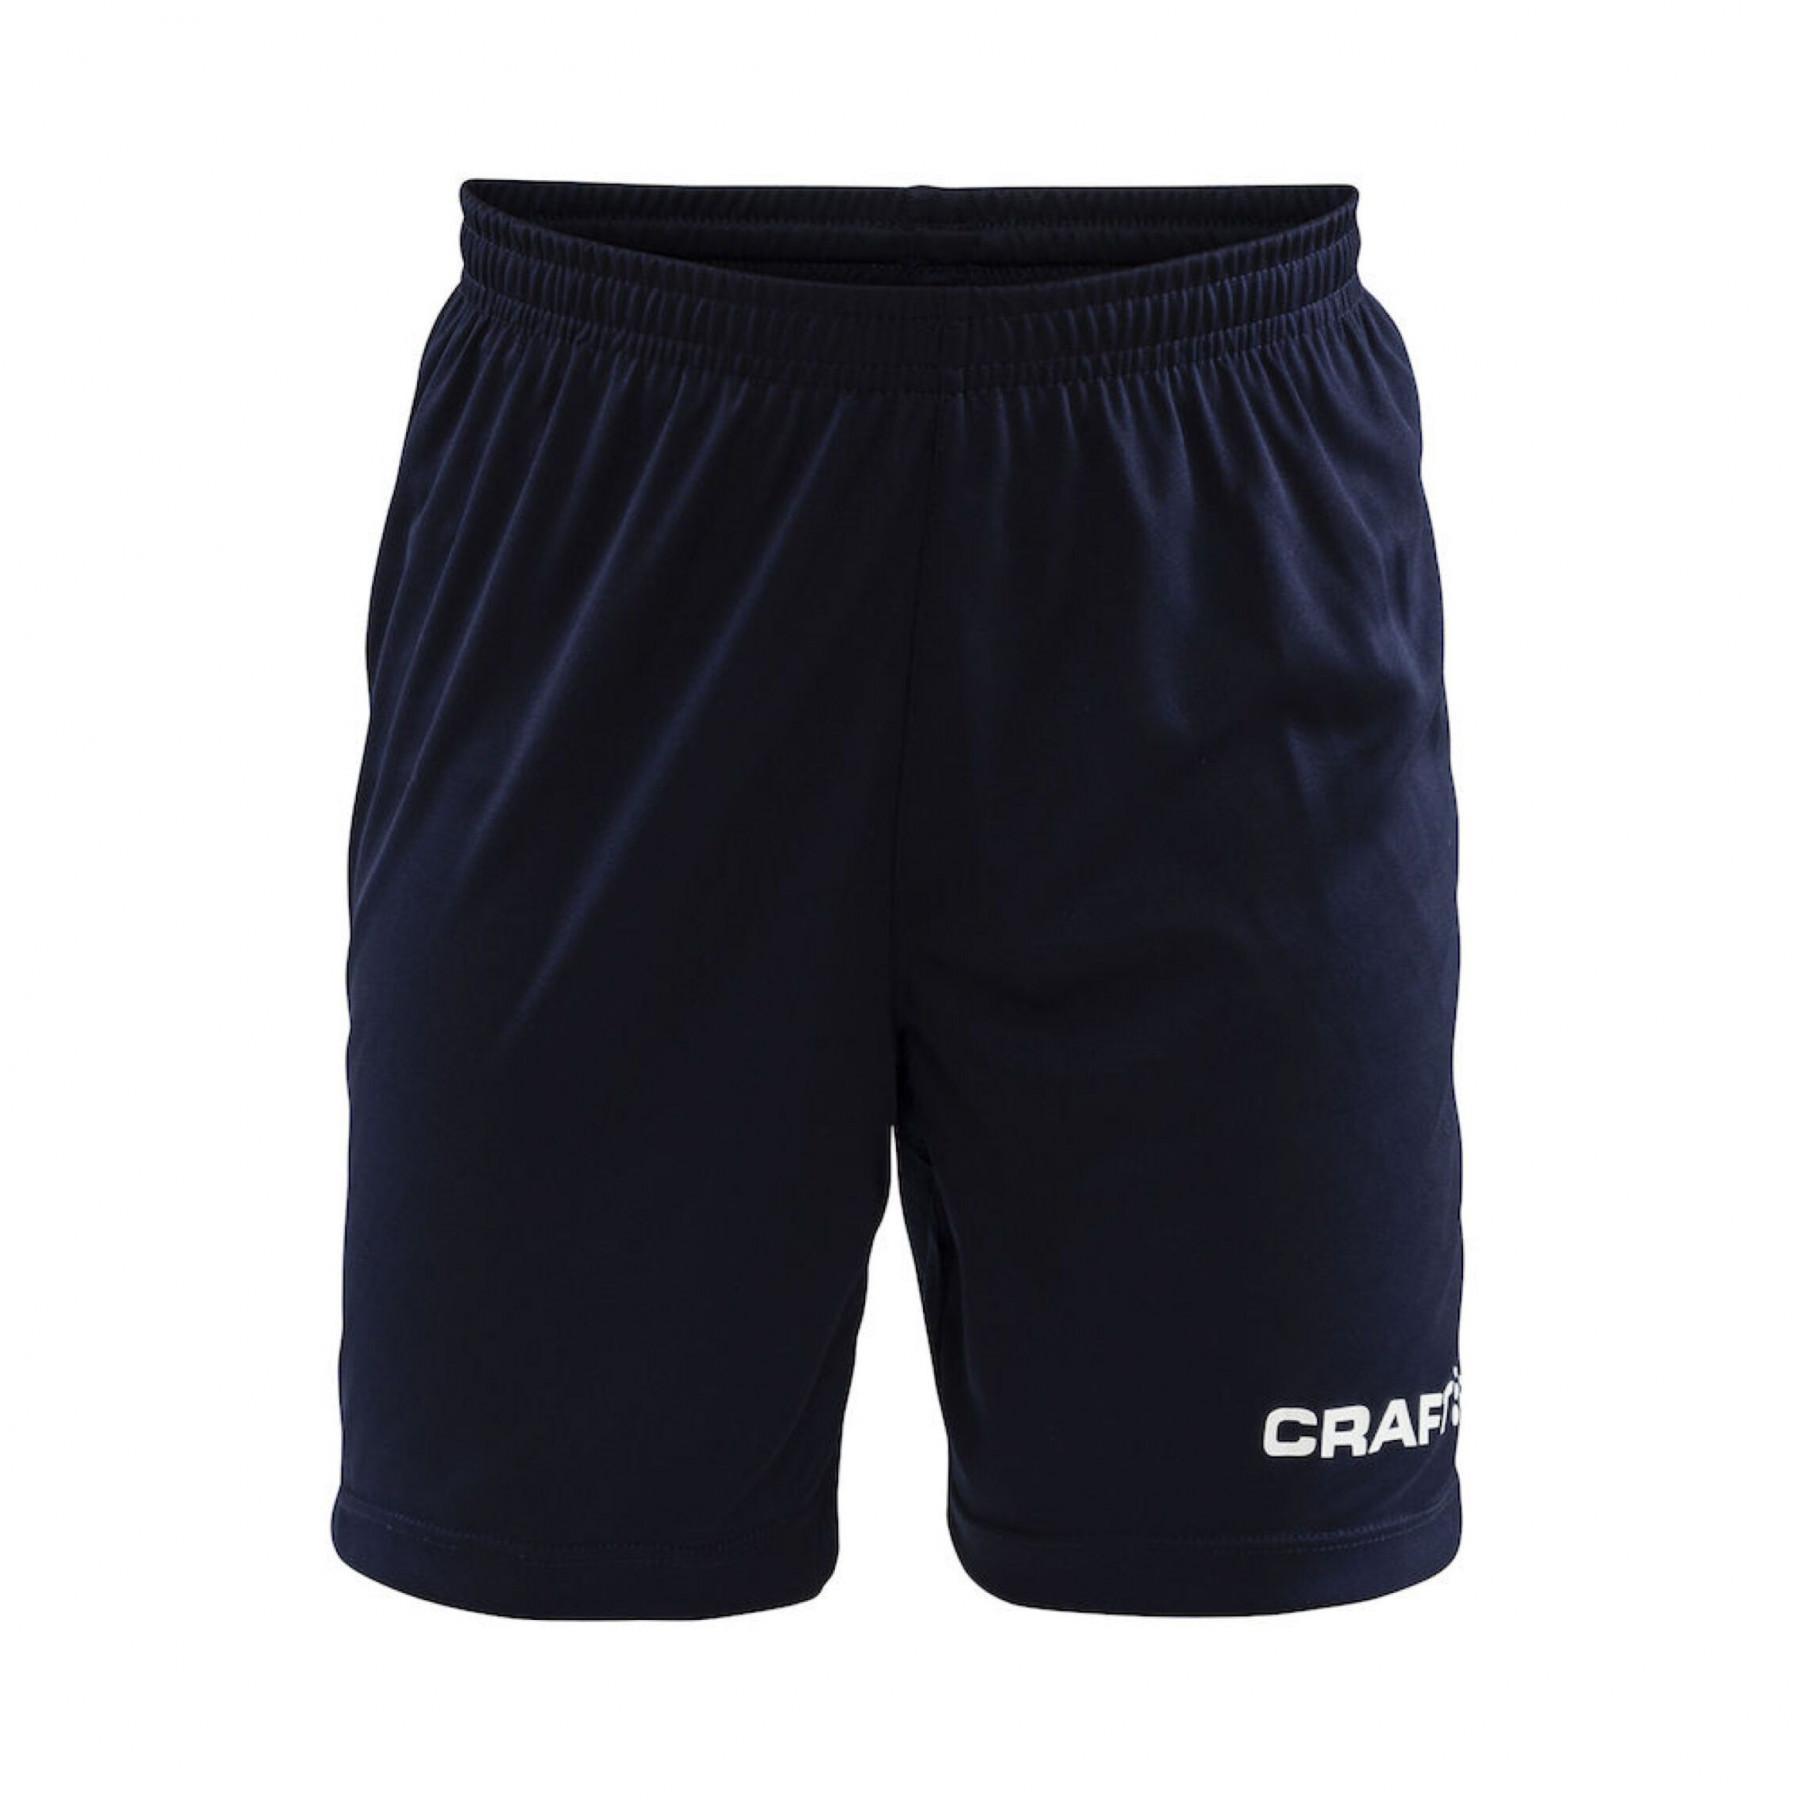 Kinder shorts Craft pro control longer cont